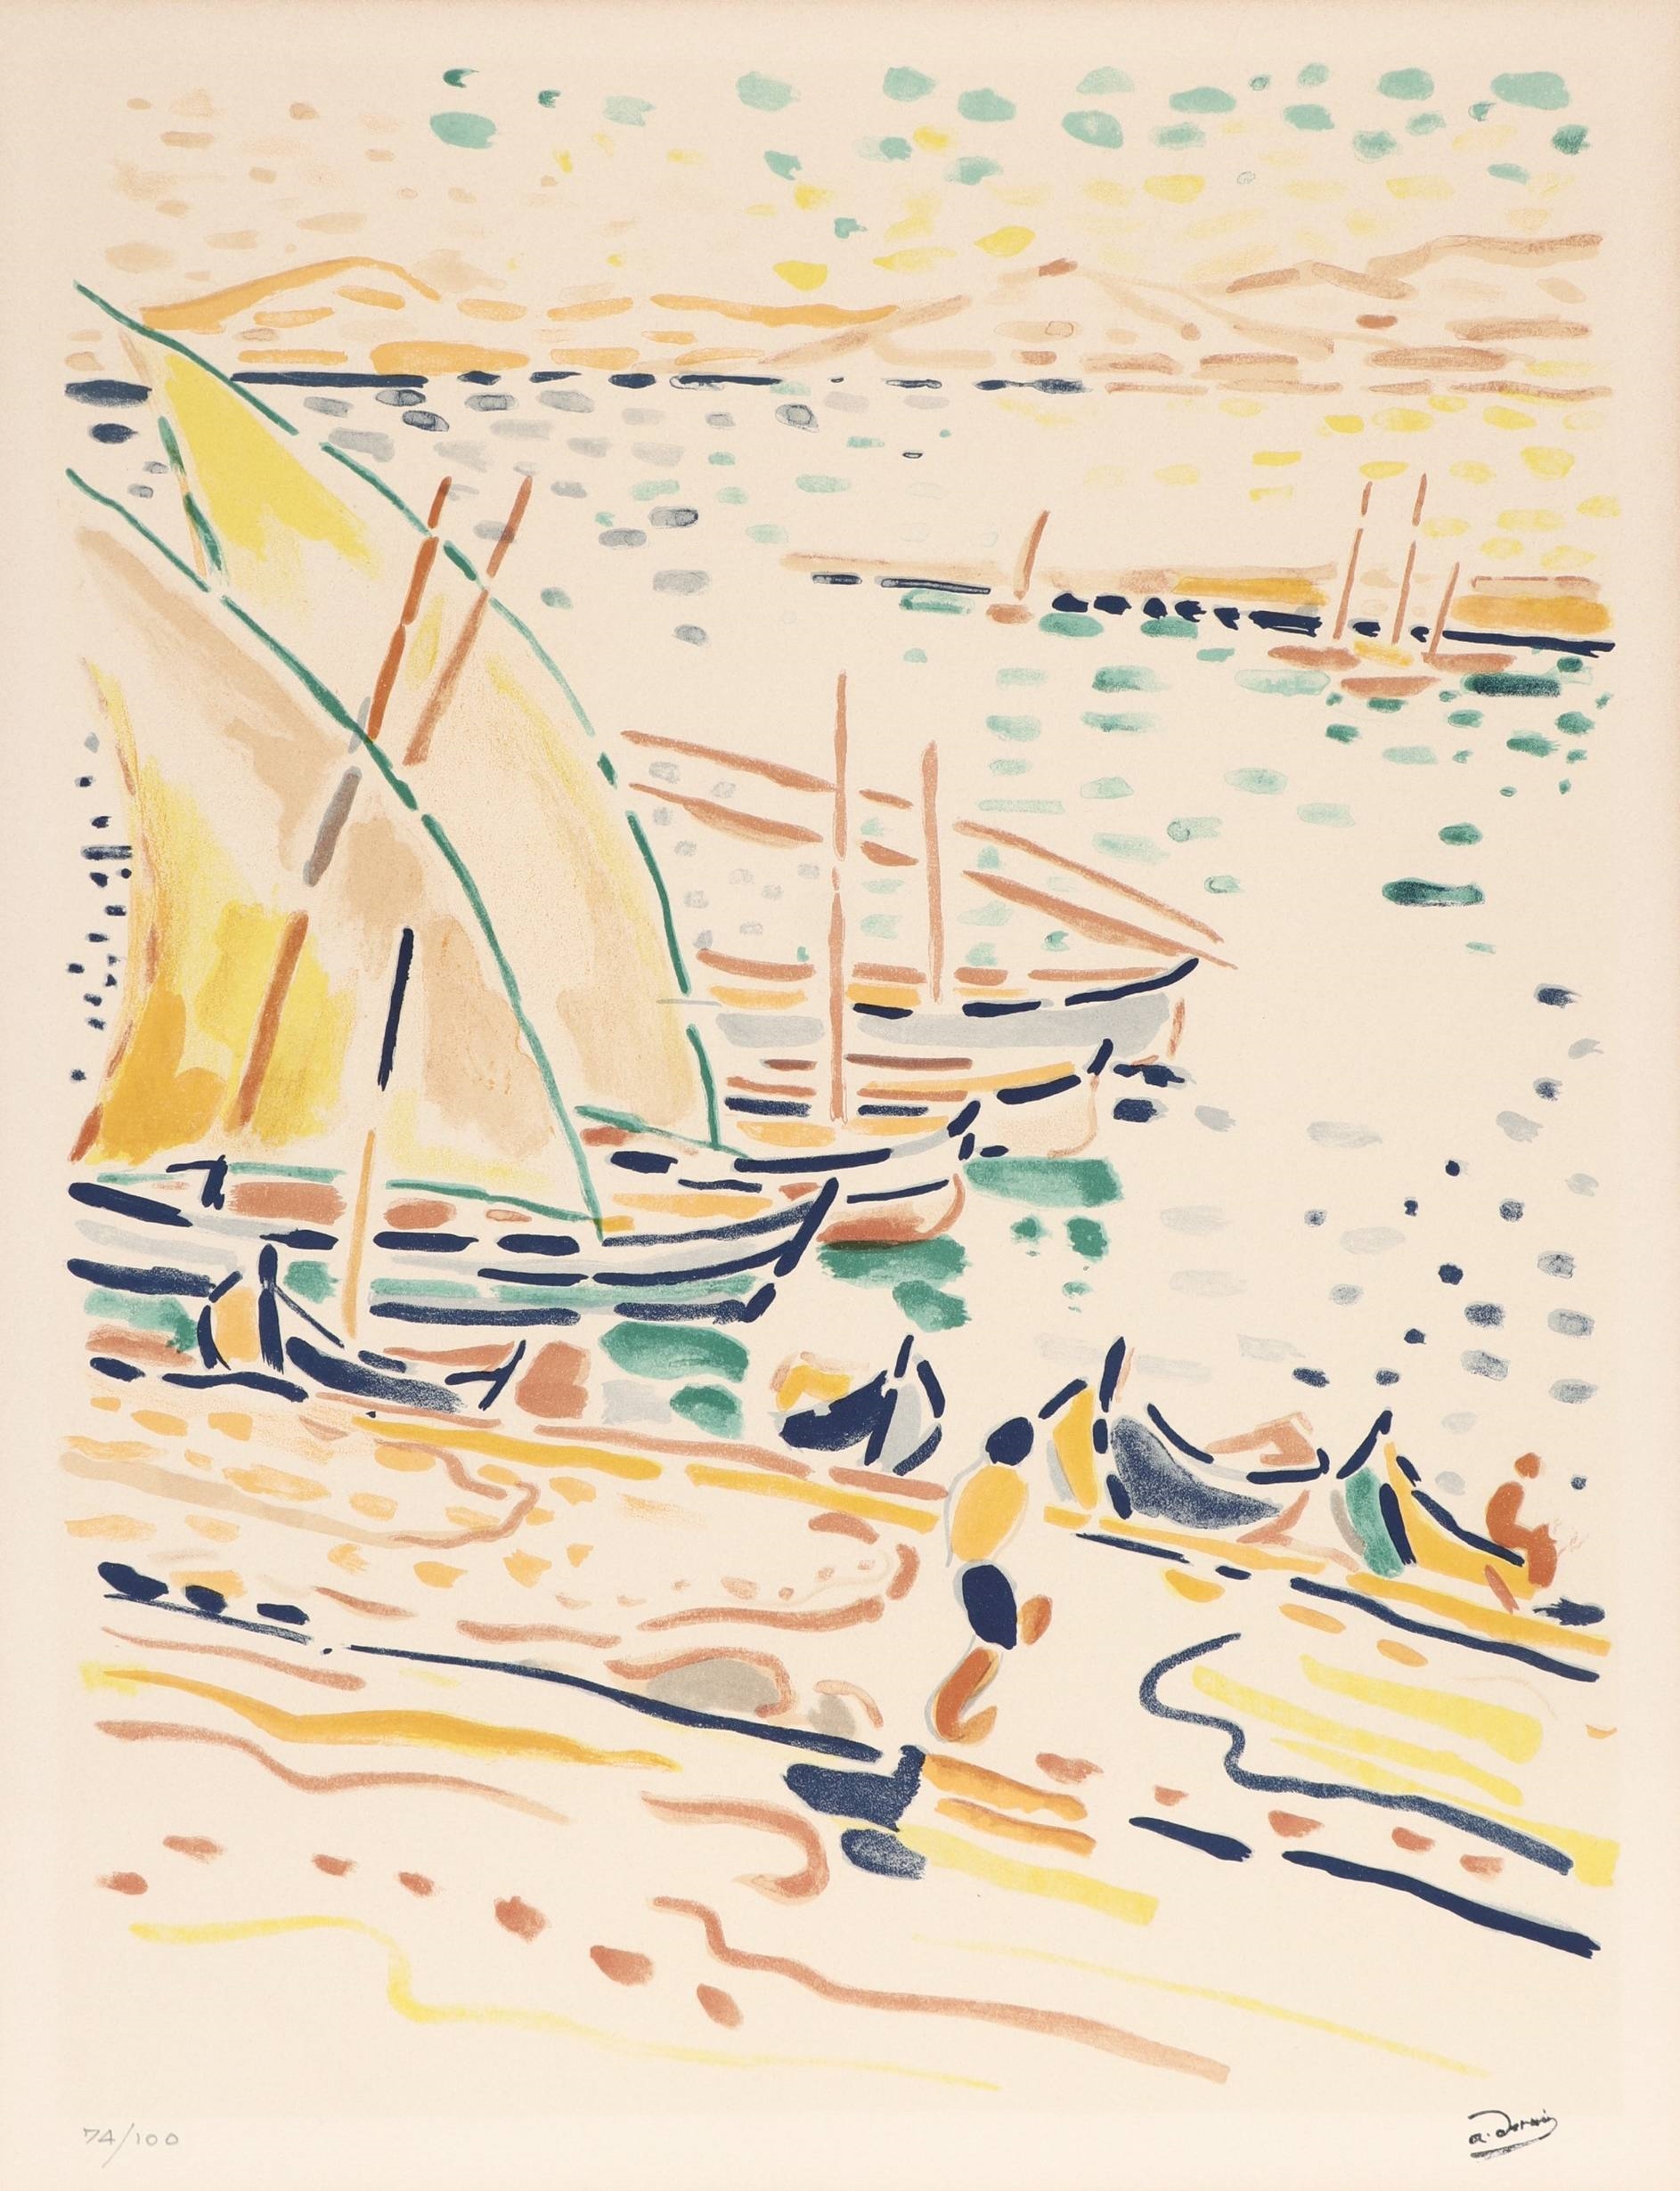 Artwork by André Derain, Derain, André (1880-1954)., Made of Colour lithograph